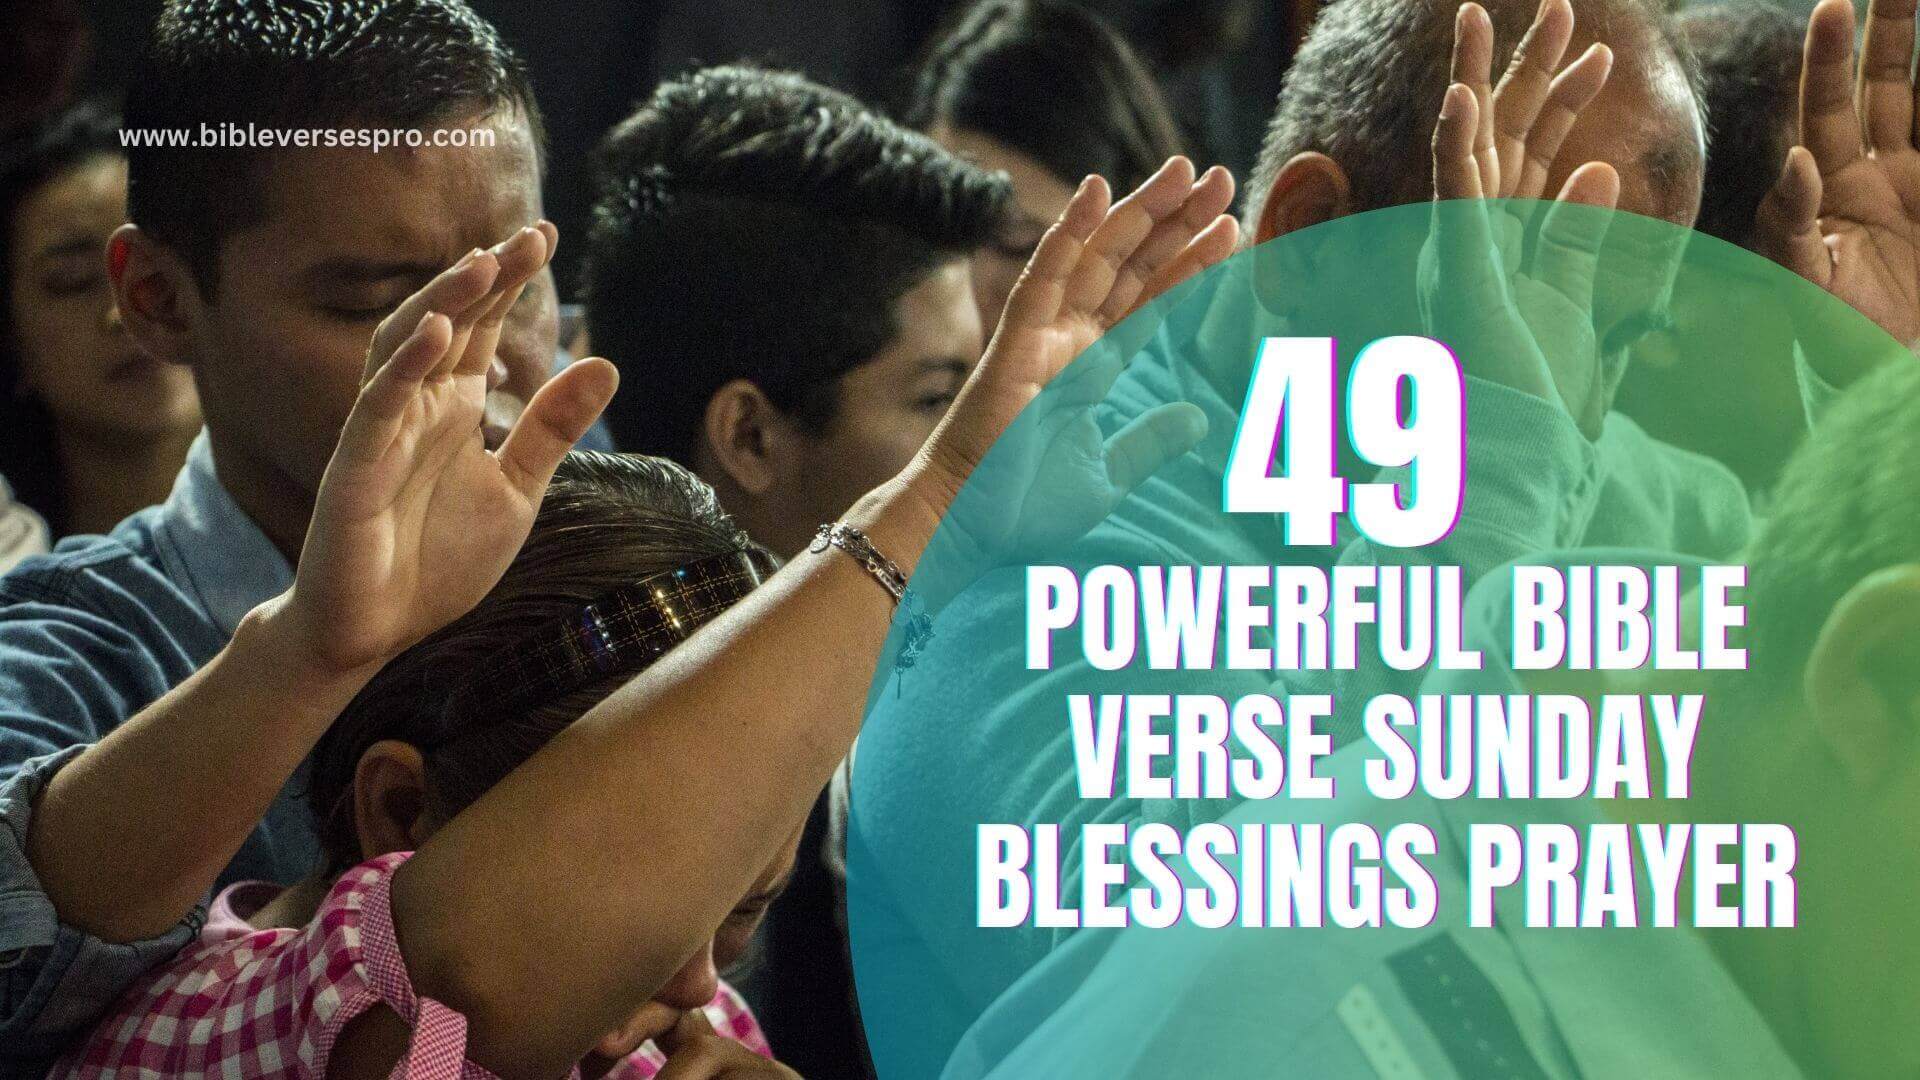 POWERFUL BIBLE VERSE SUNDAY BLESSINGS PRAYER (1) (1)